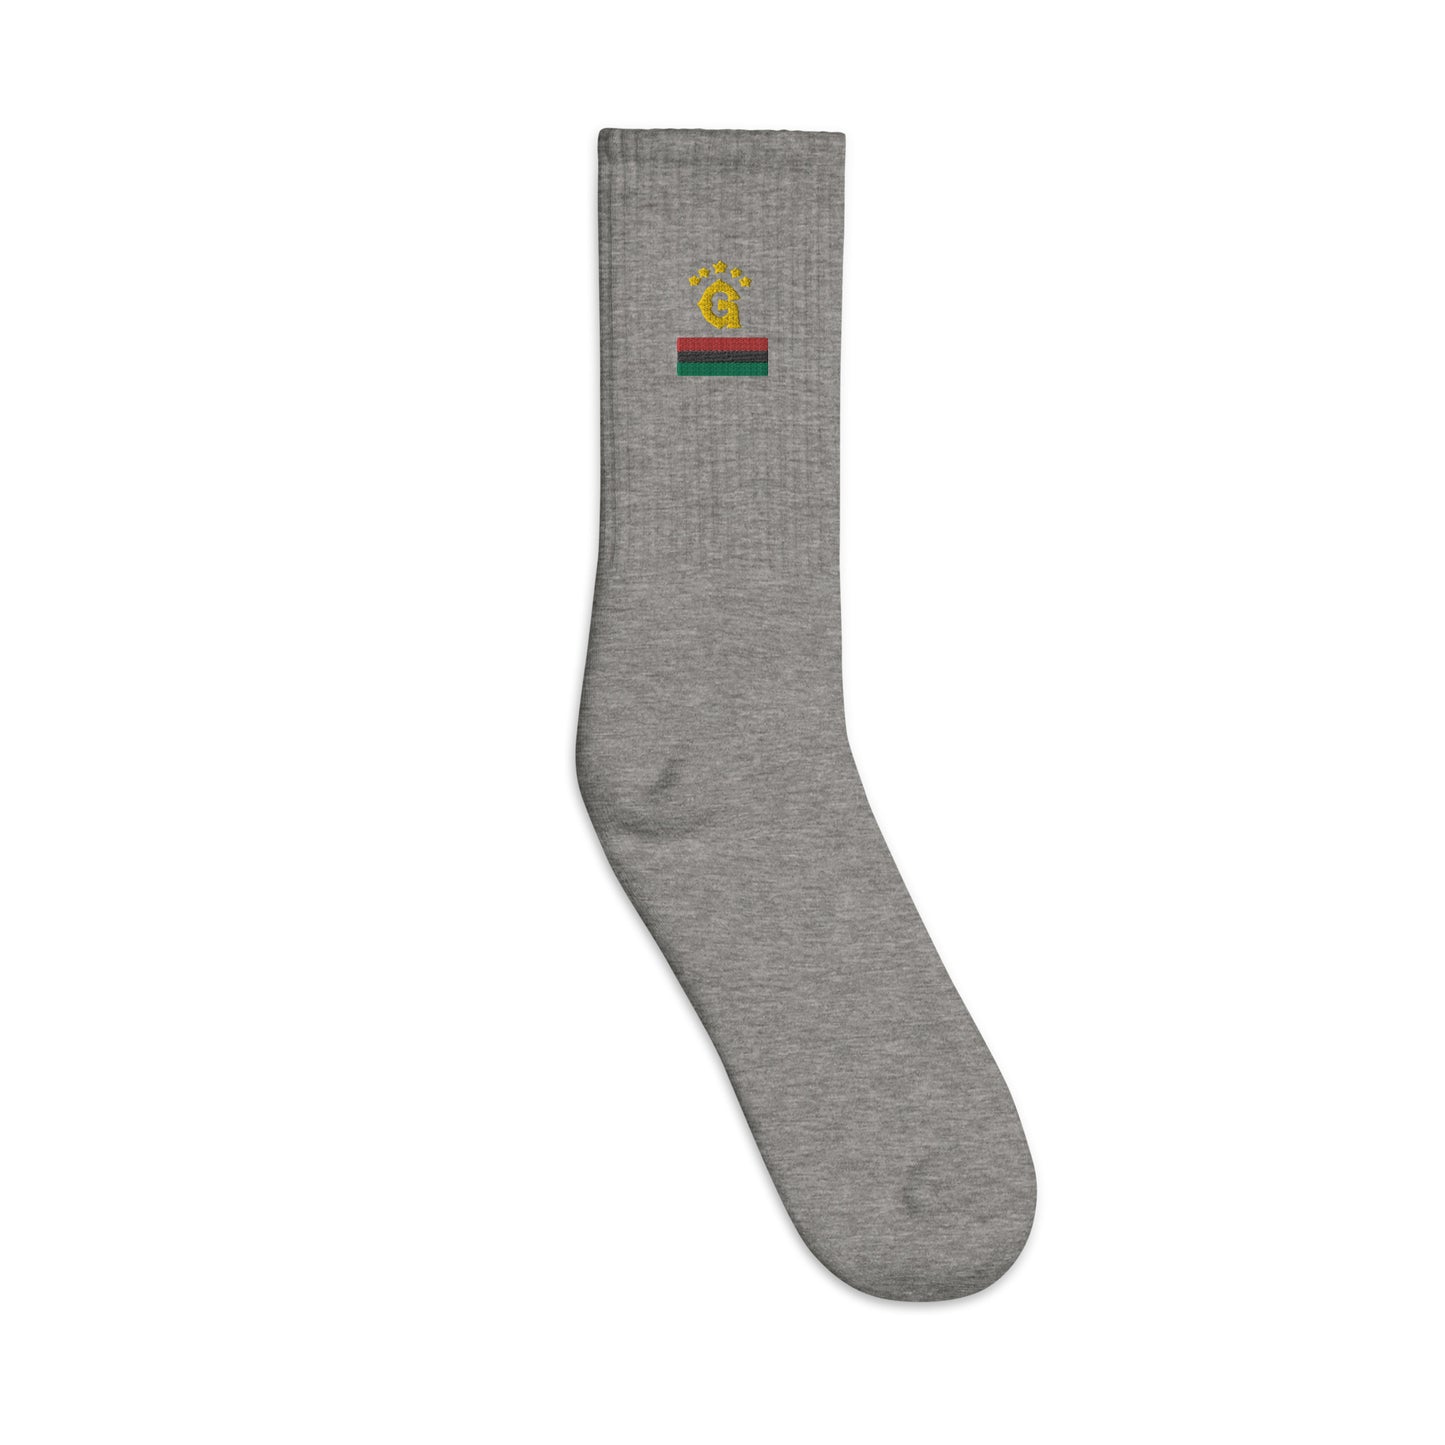 5ive Star G Embroidered socks